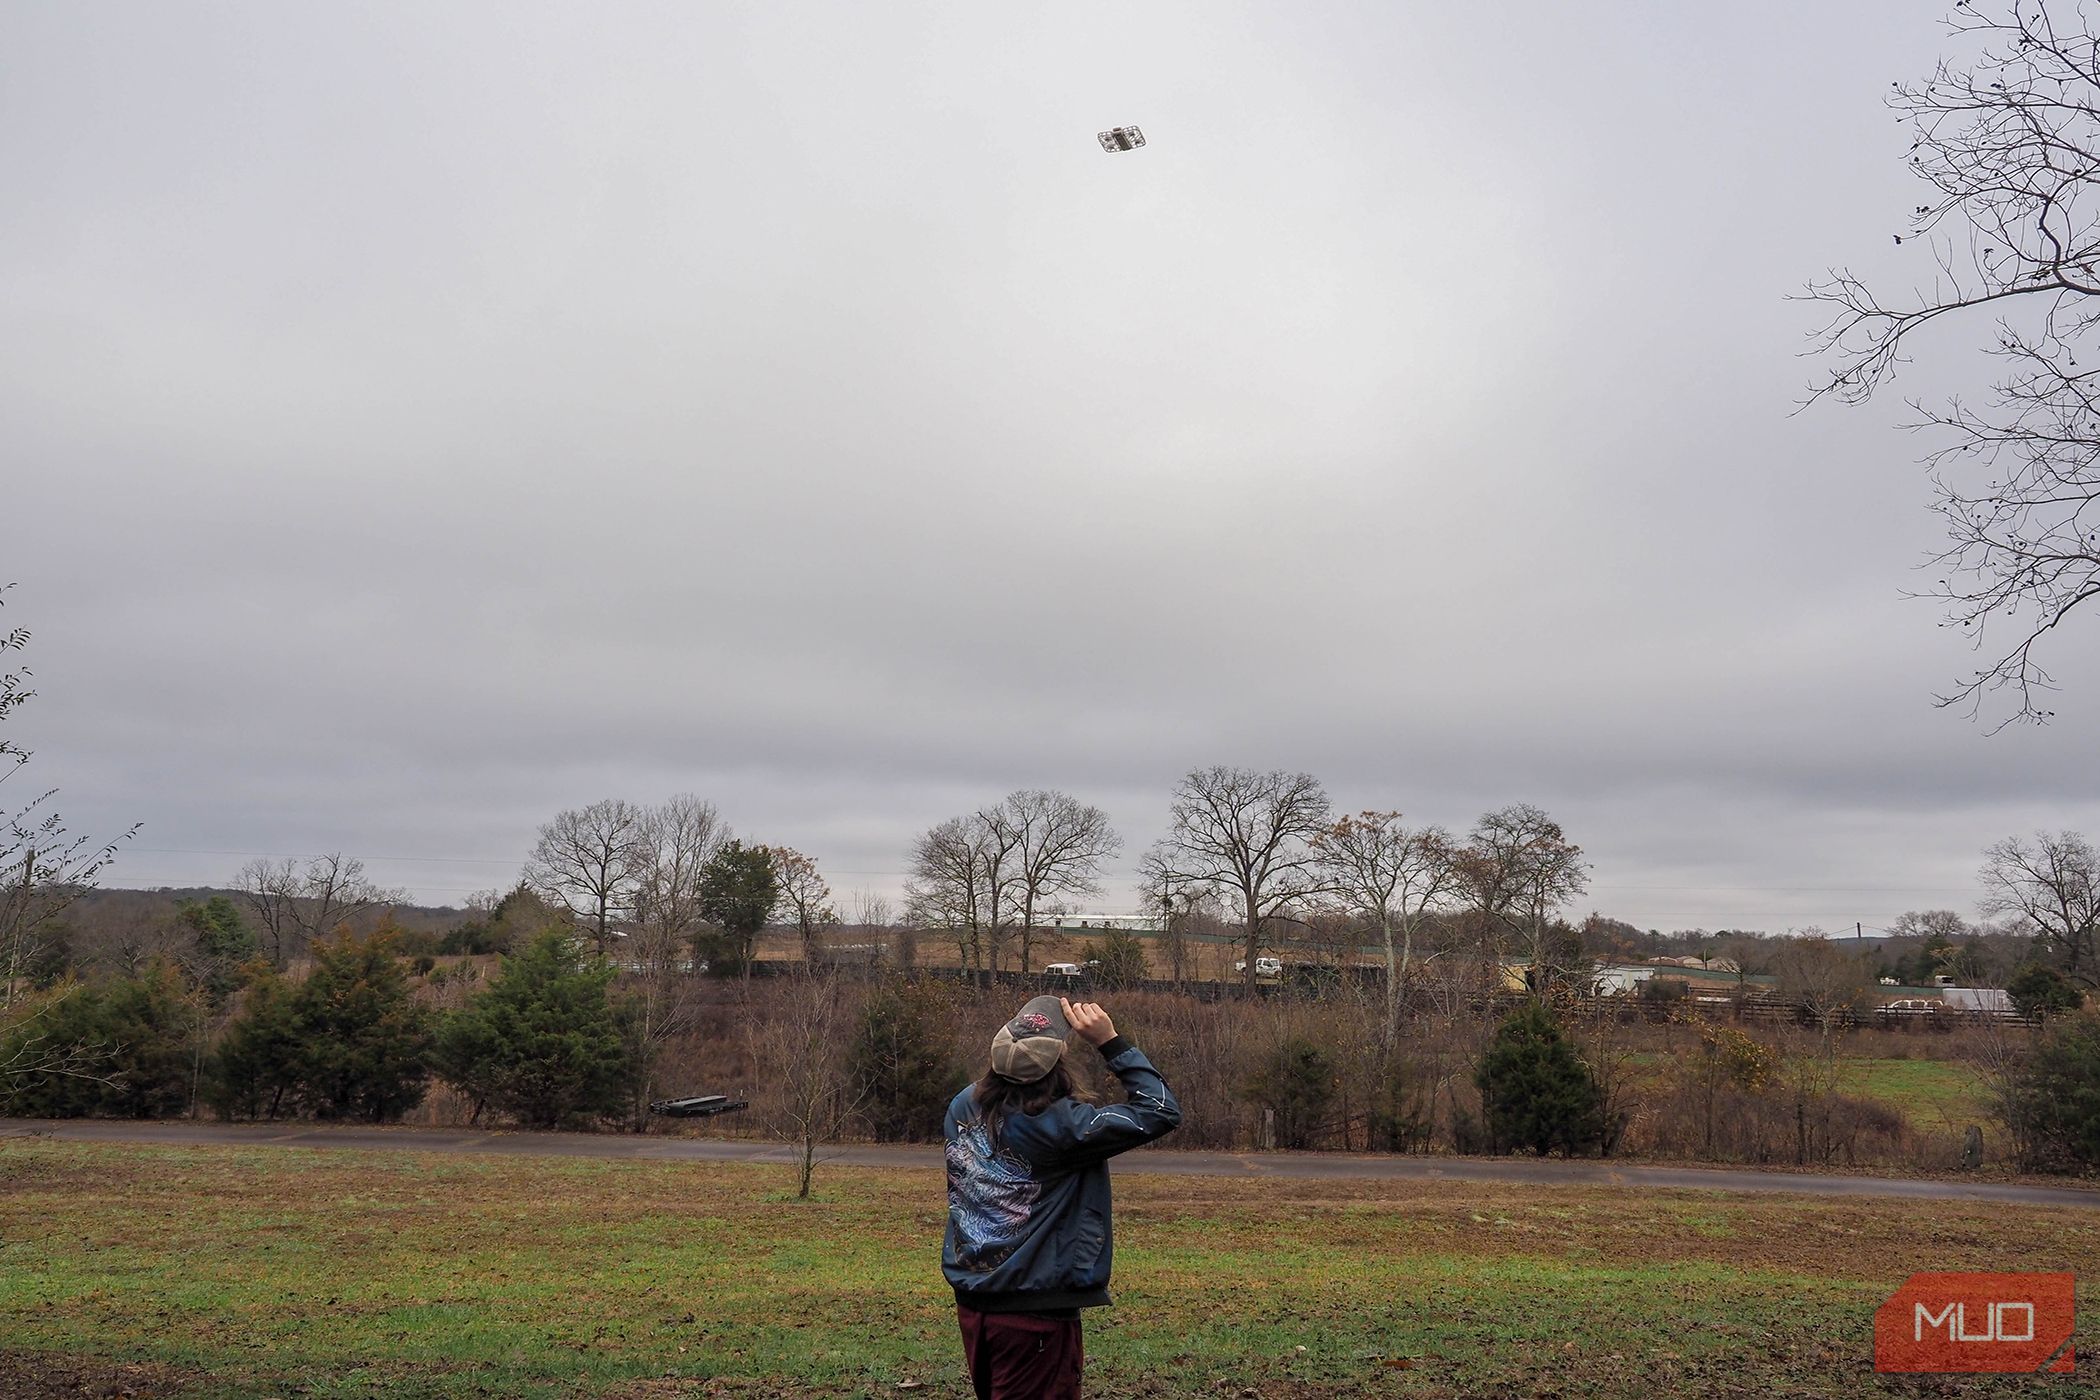 HOVERAir X1 Review: The Autonomous Flying Cameraman